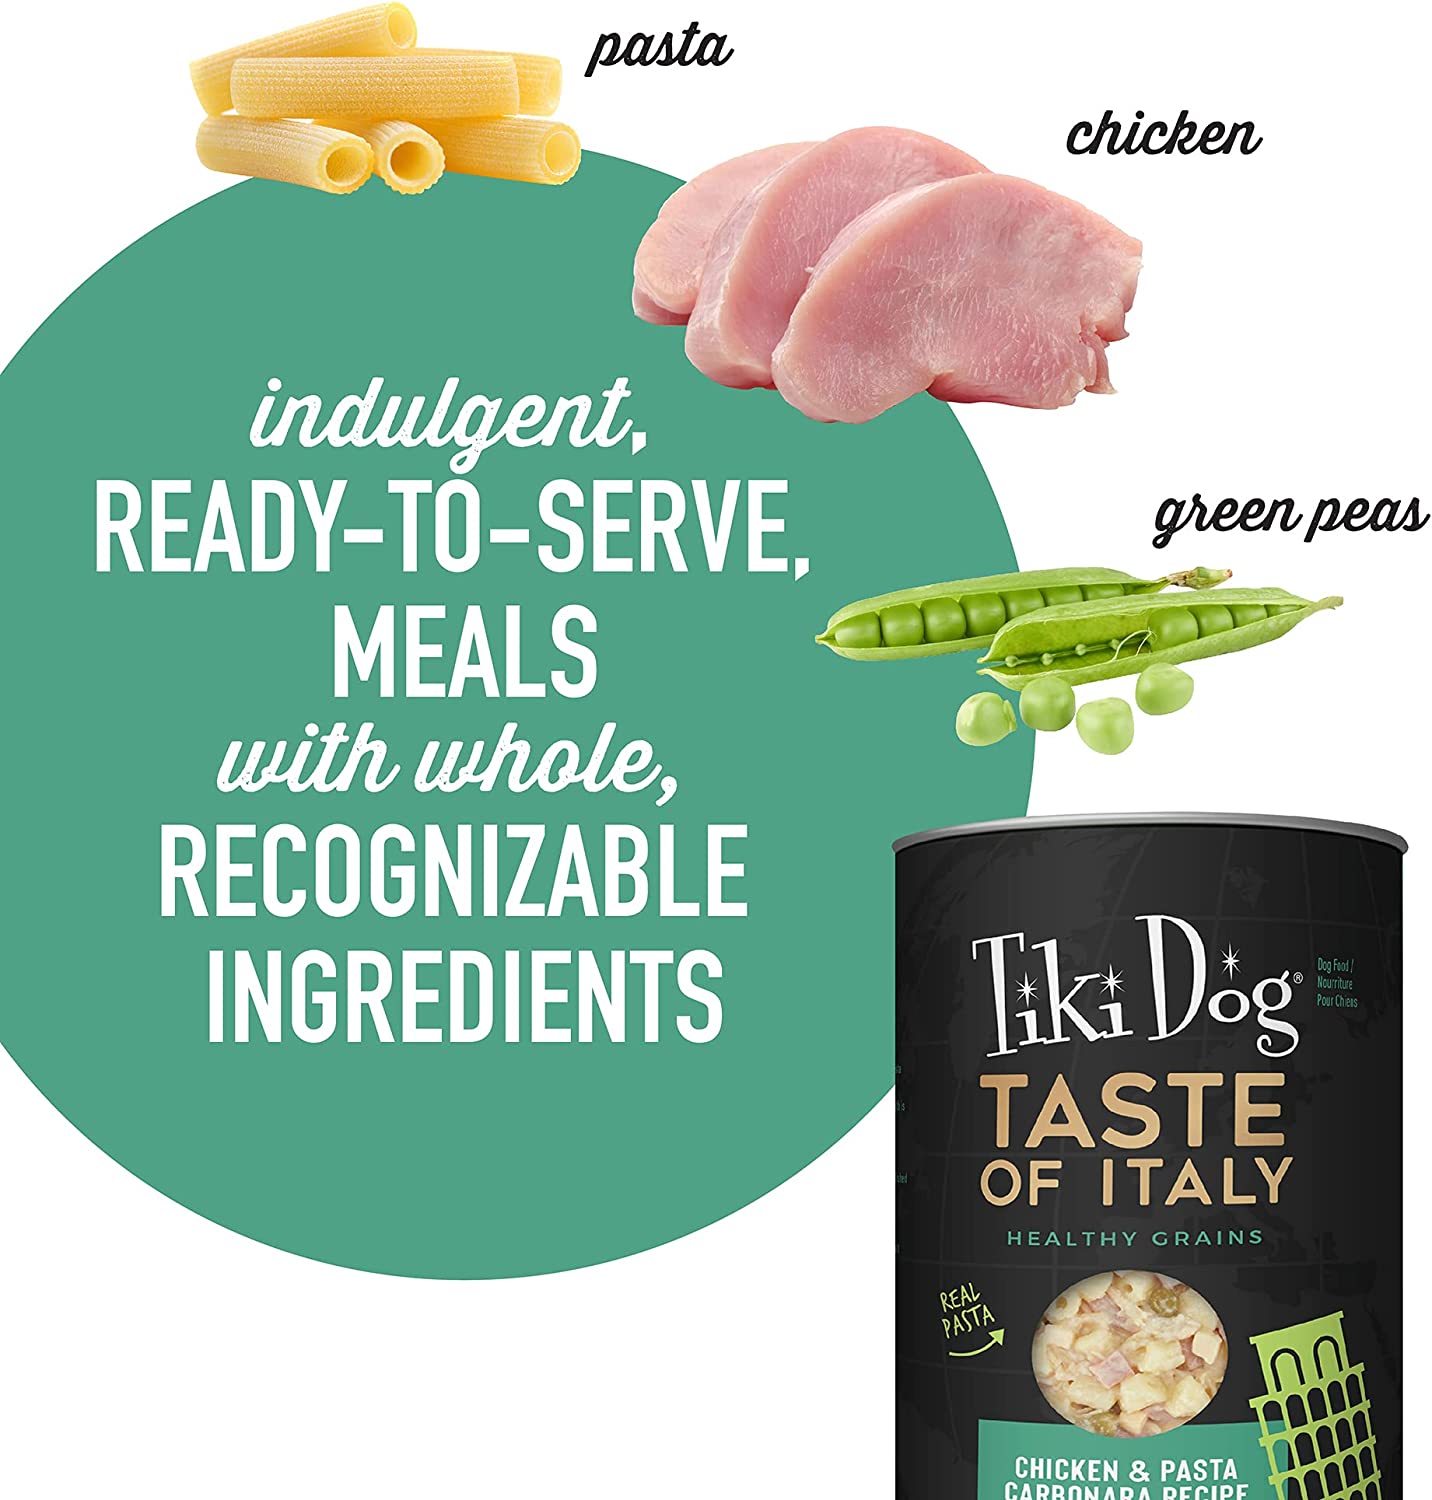 Tiki Dog Taste of Italy! Chicken & Pasta Carbonara 12 oz can